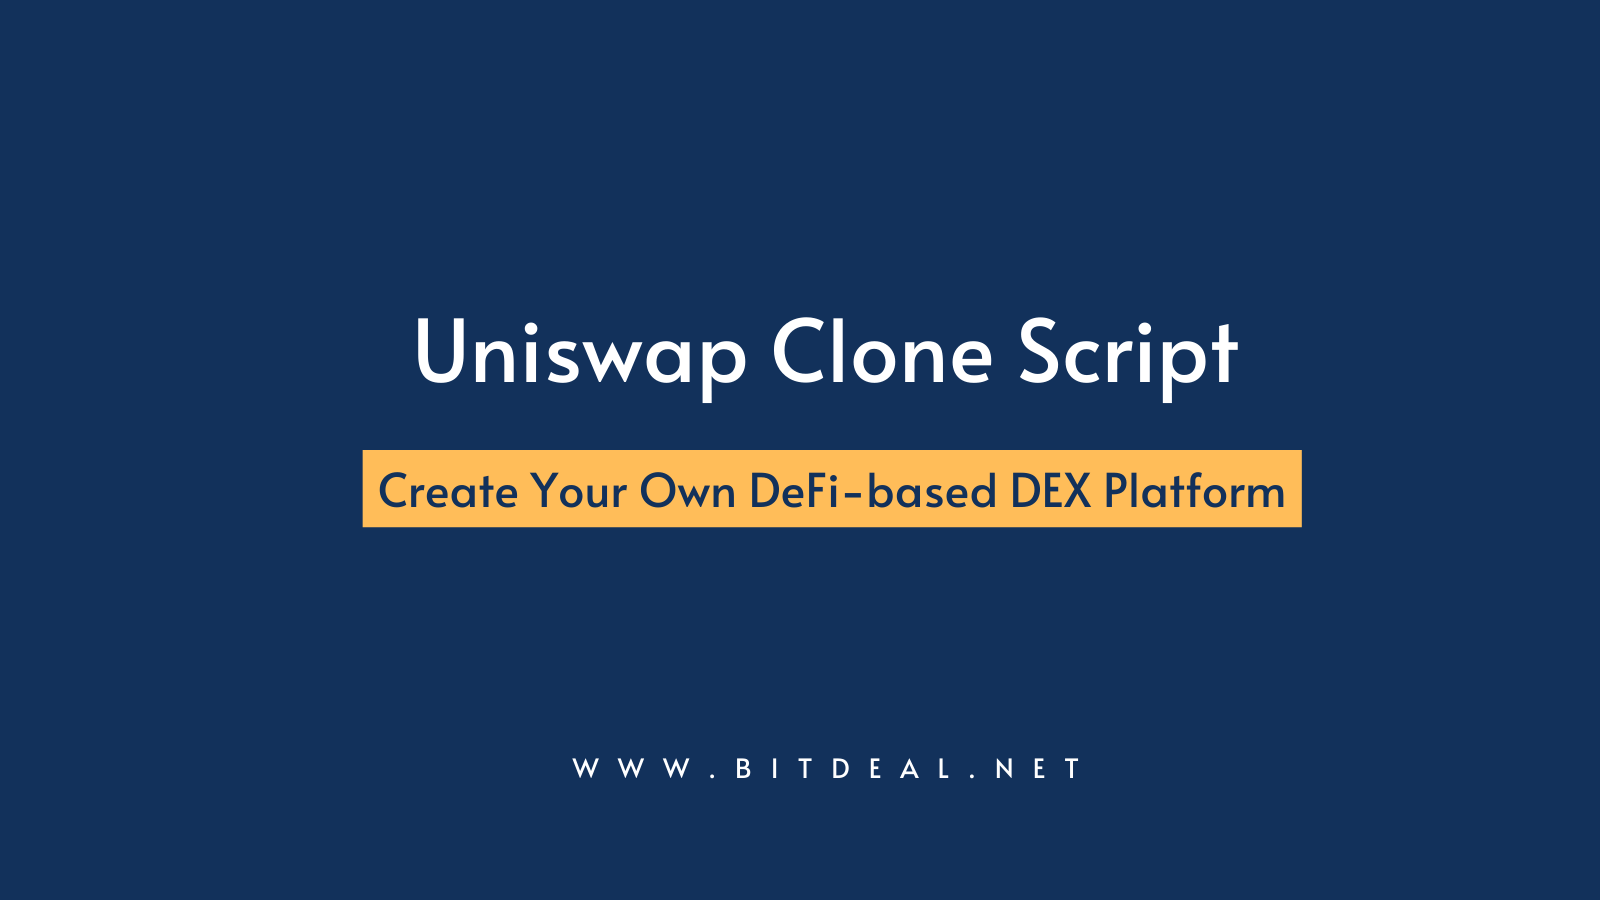 Uniswap Clone Script To Create Your Own DeFi Exchange Like Uniswap